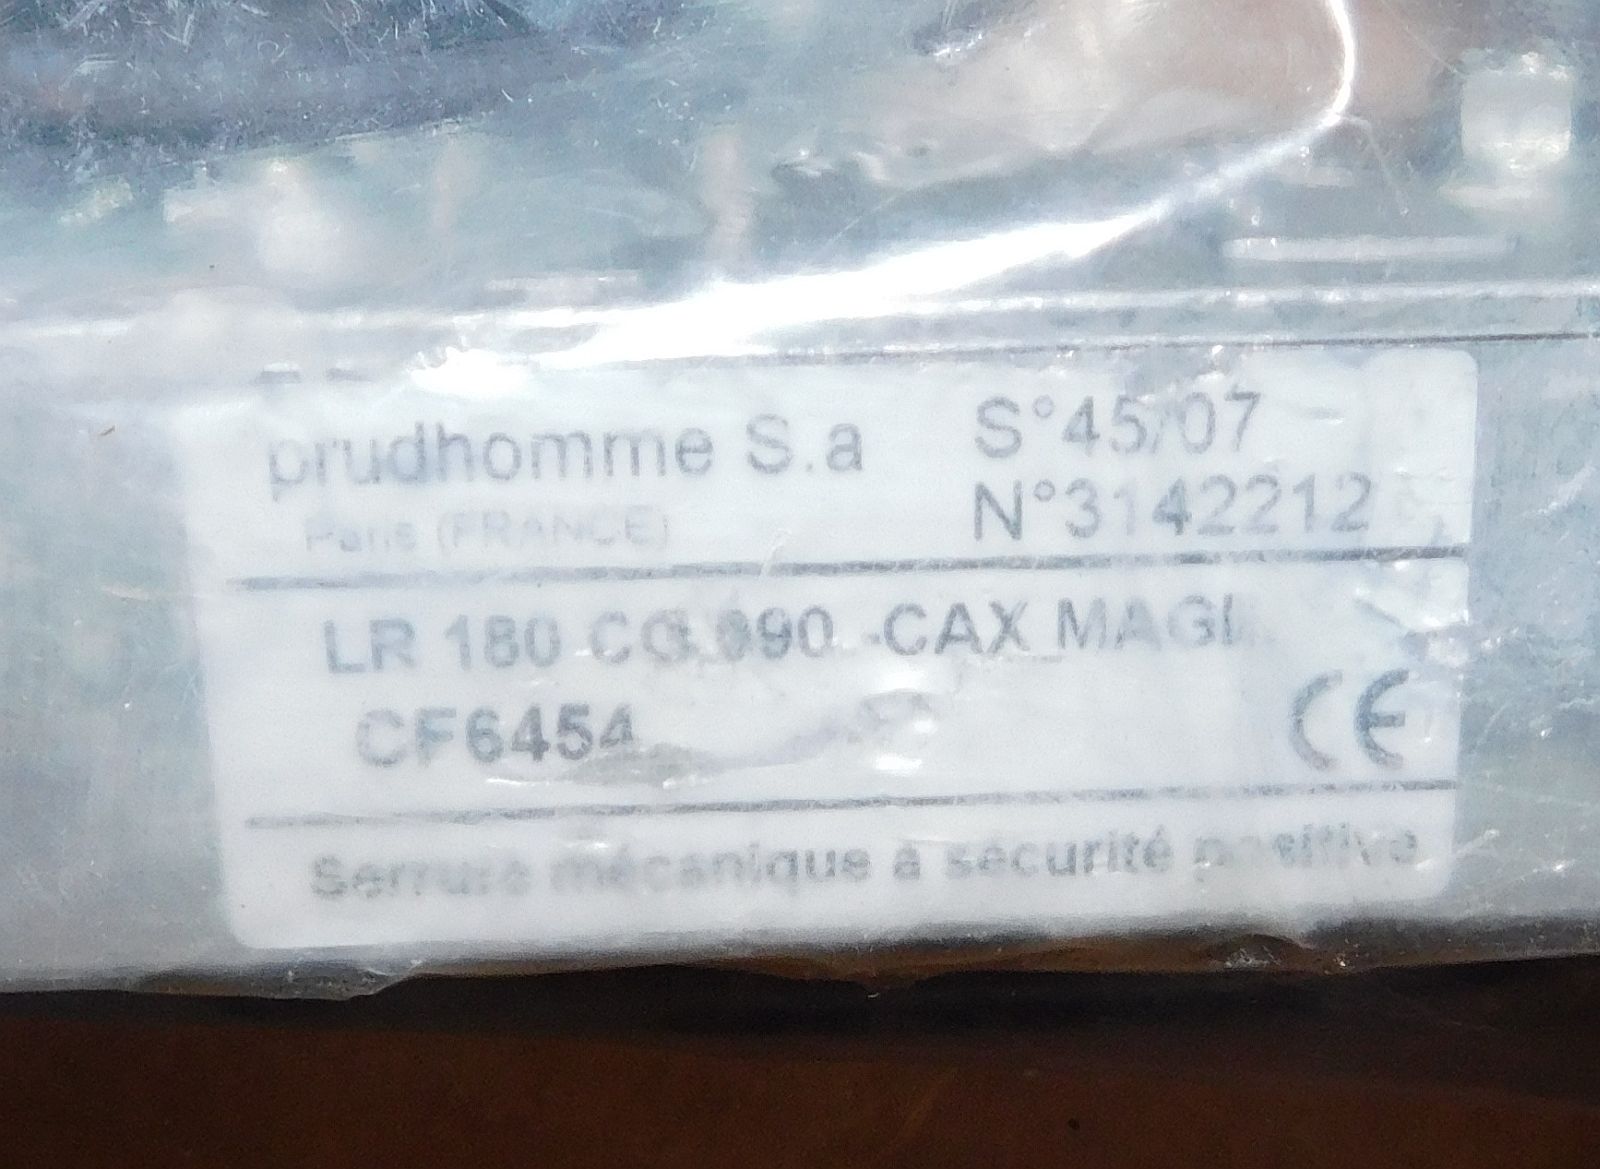 Prudhomme Elevator Lock Assembly LR180, 3142212 New